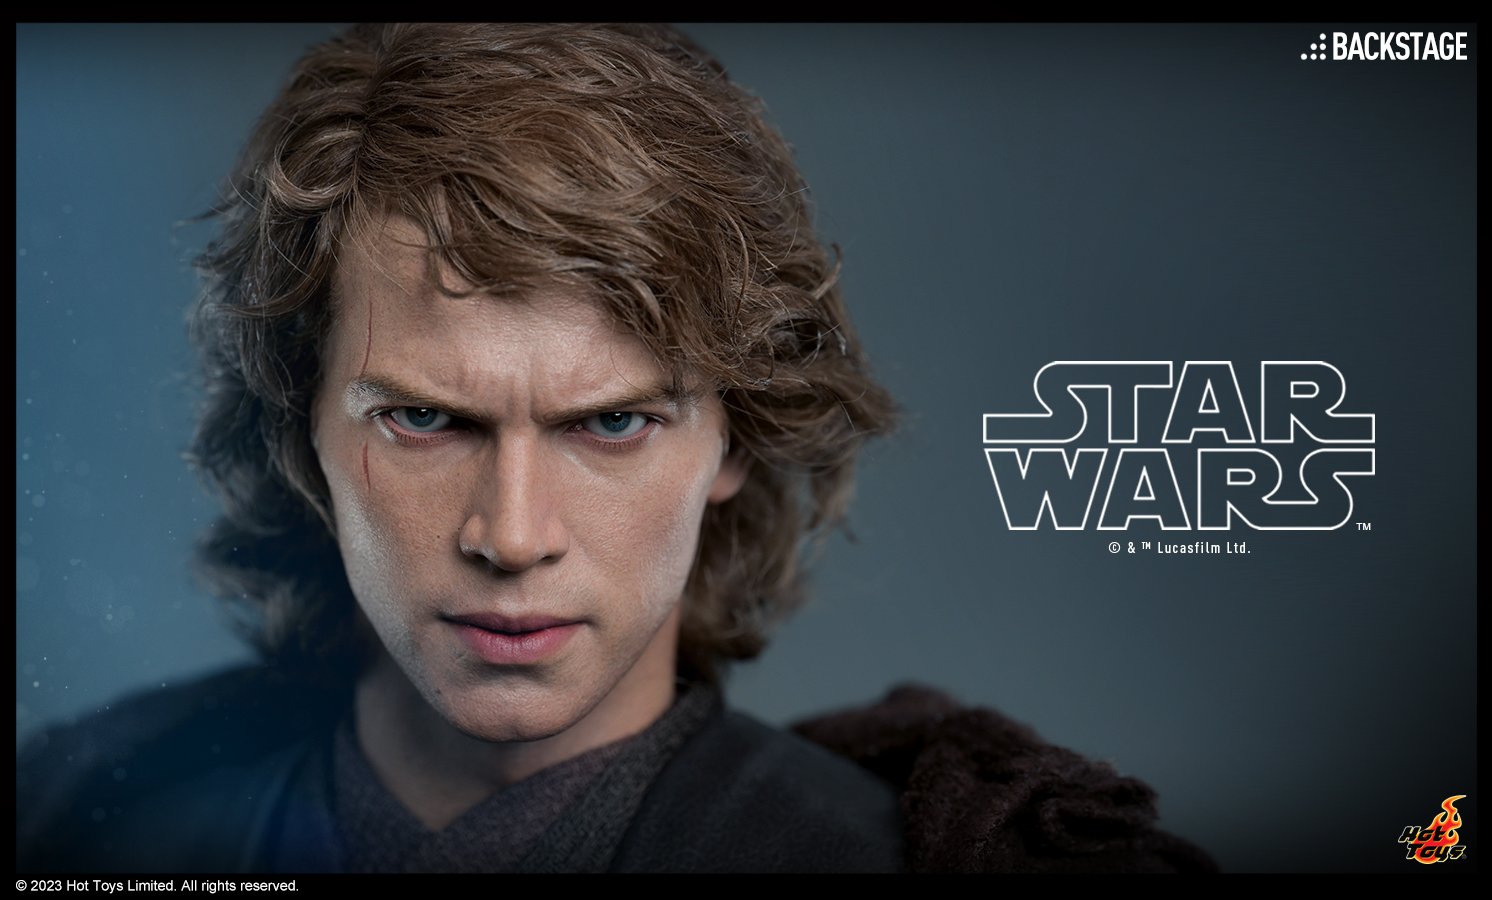 Hot Toys Debuts New Premium Line with Anakin Skywalker - Star Wars News Net